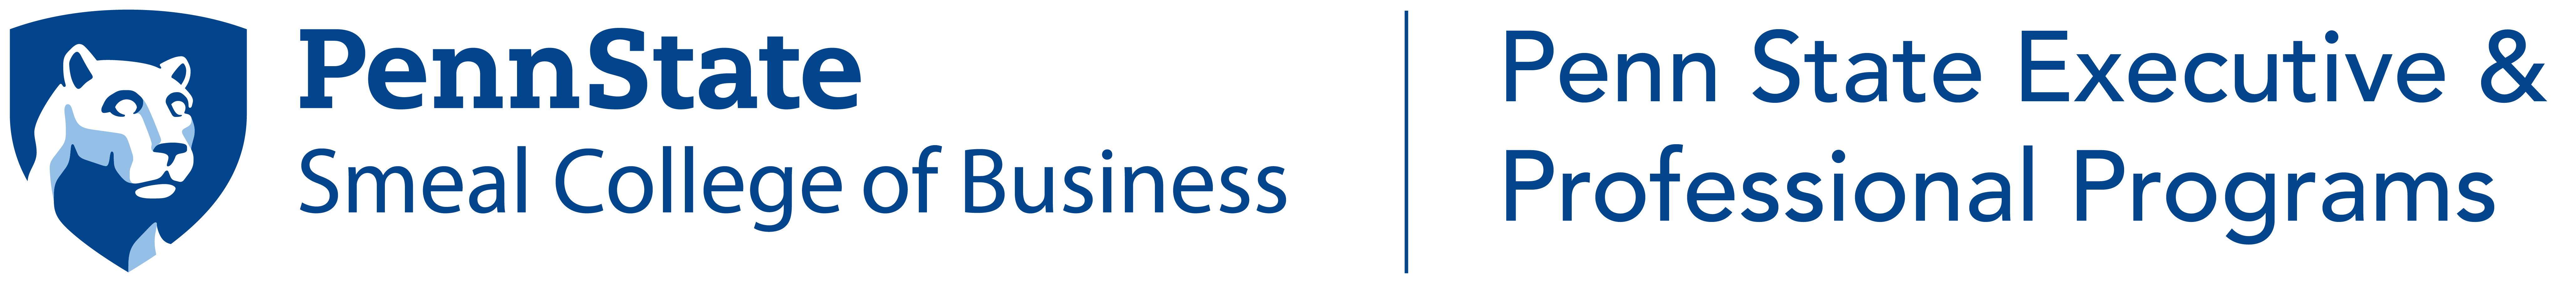 Penn State Executive Programs Logo